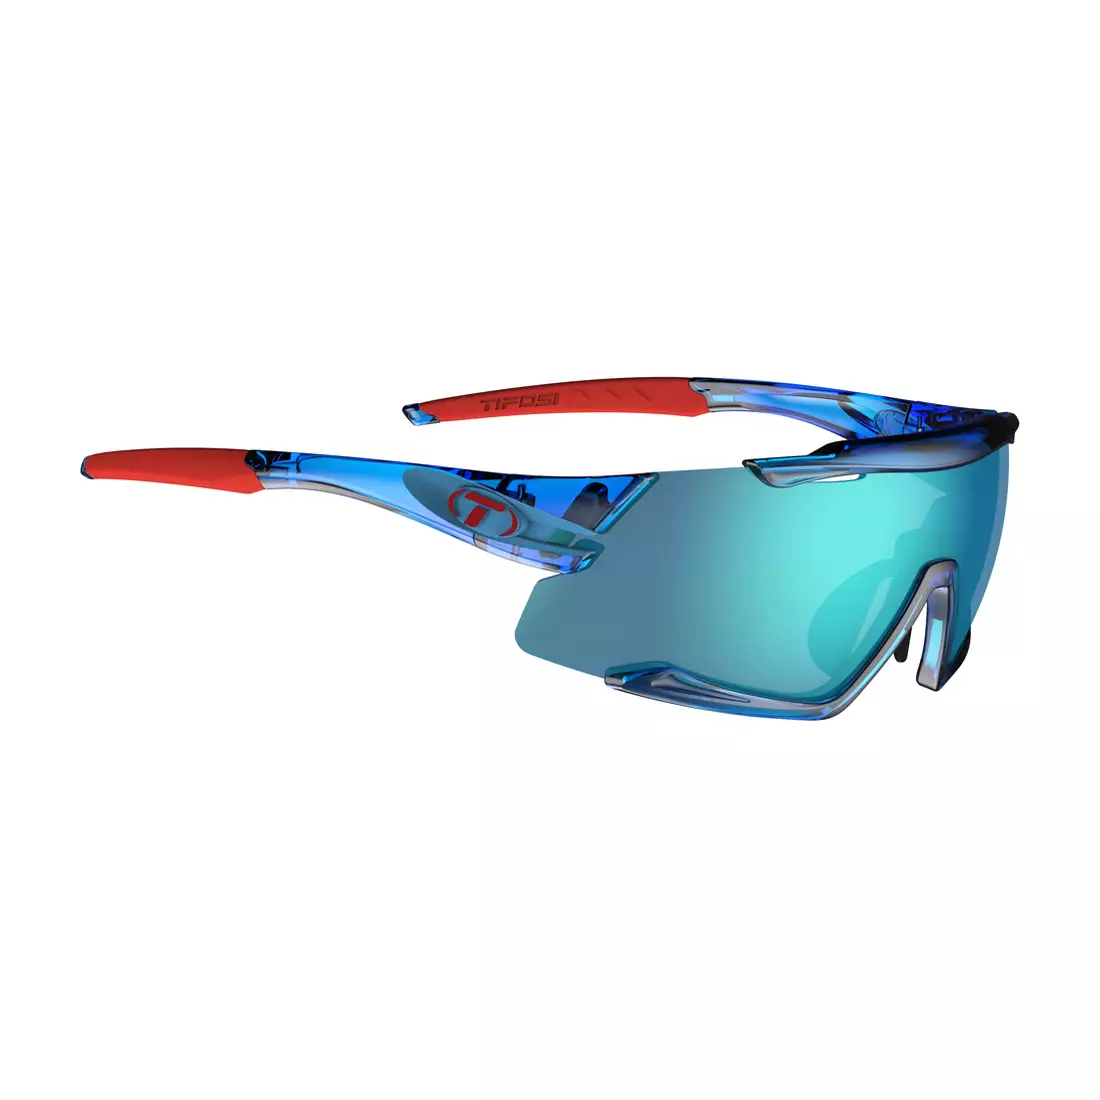 TIFOSI športové okuliare s vymeniteľnými šošovkami aethon clarion crystal blue (Clarion Blue, AC Red, Clear) TFI-1580106122